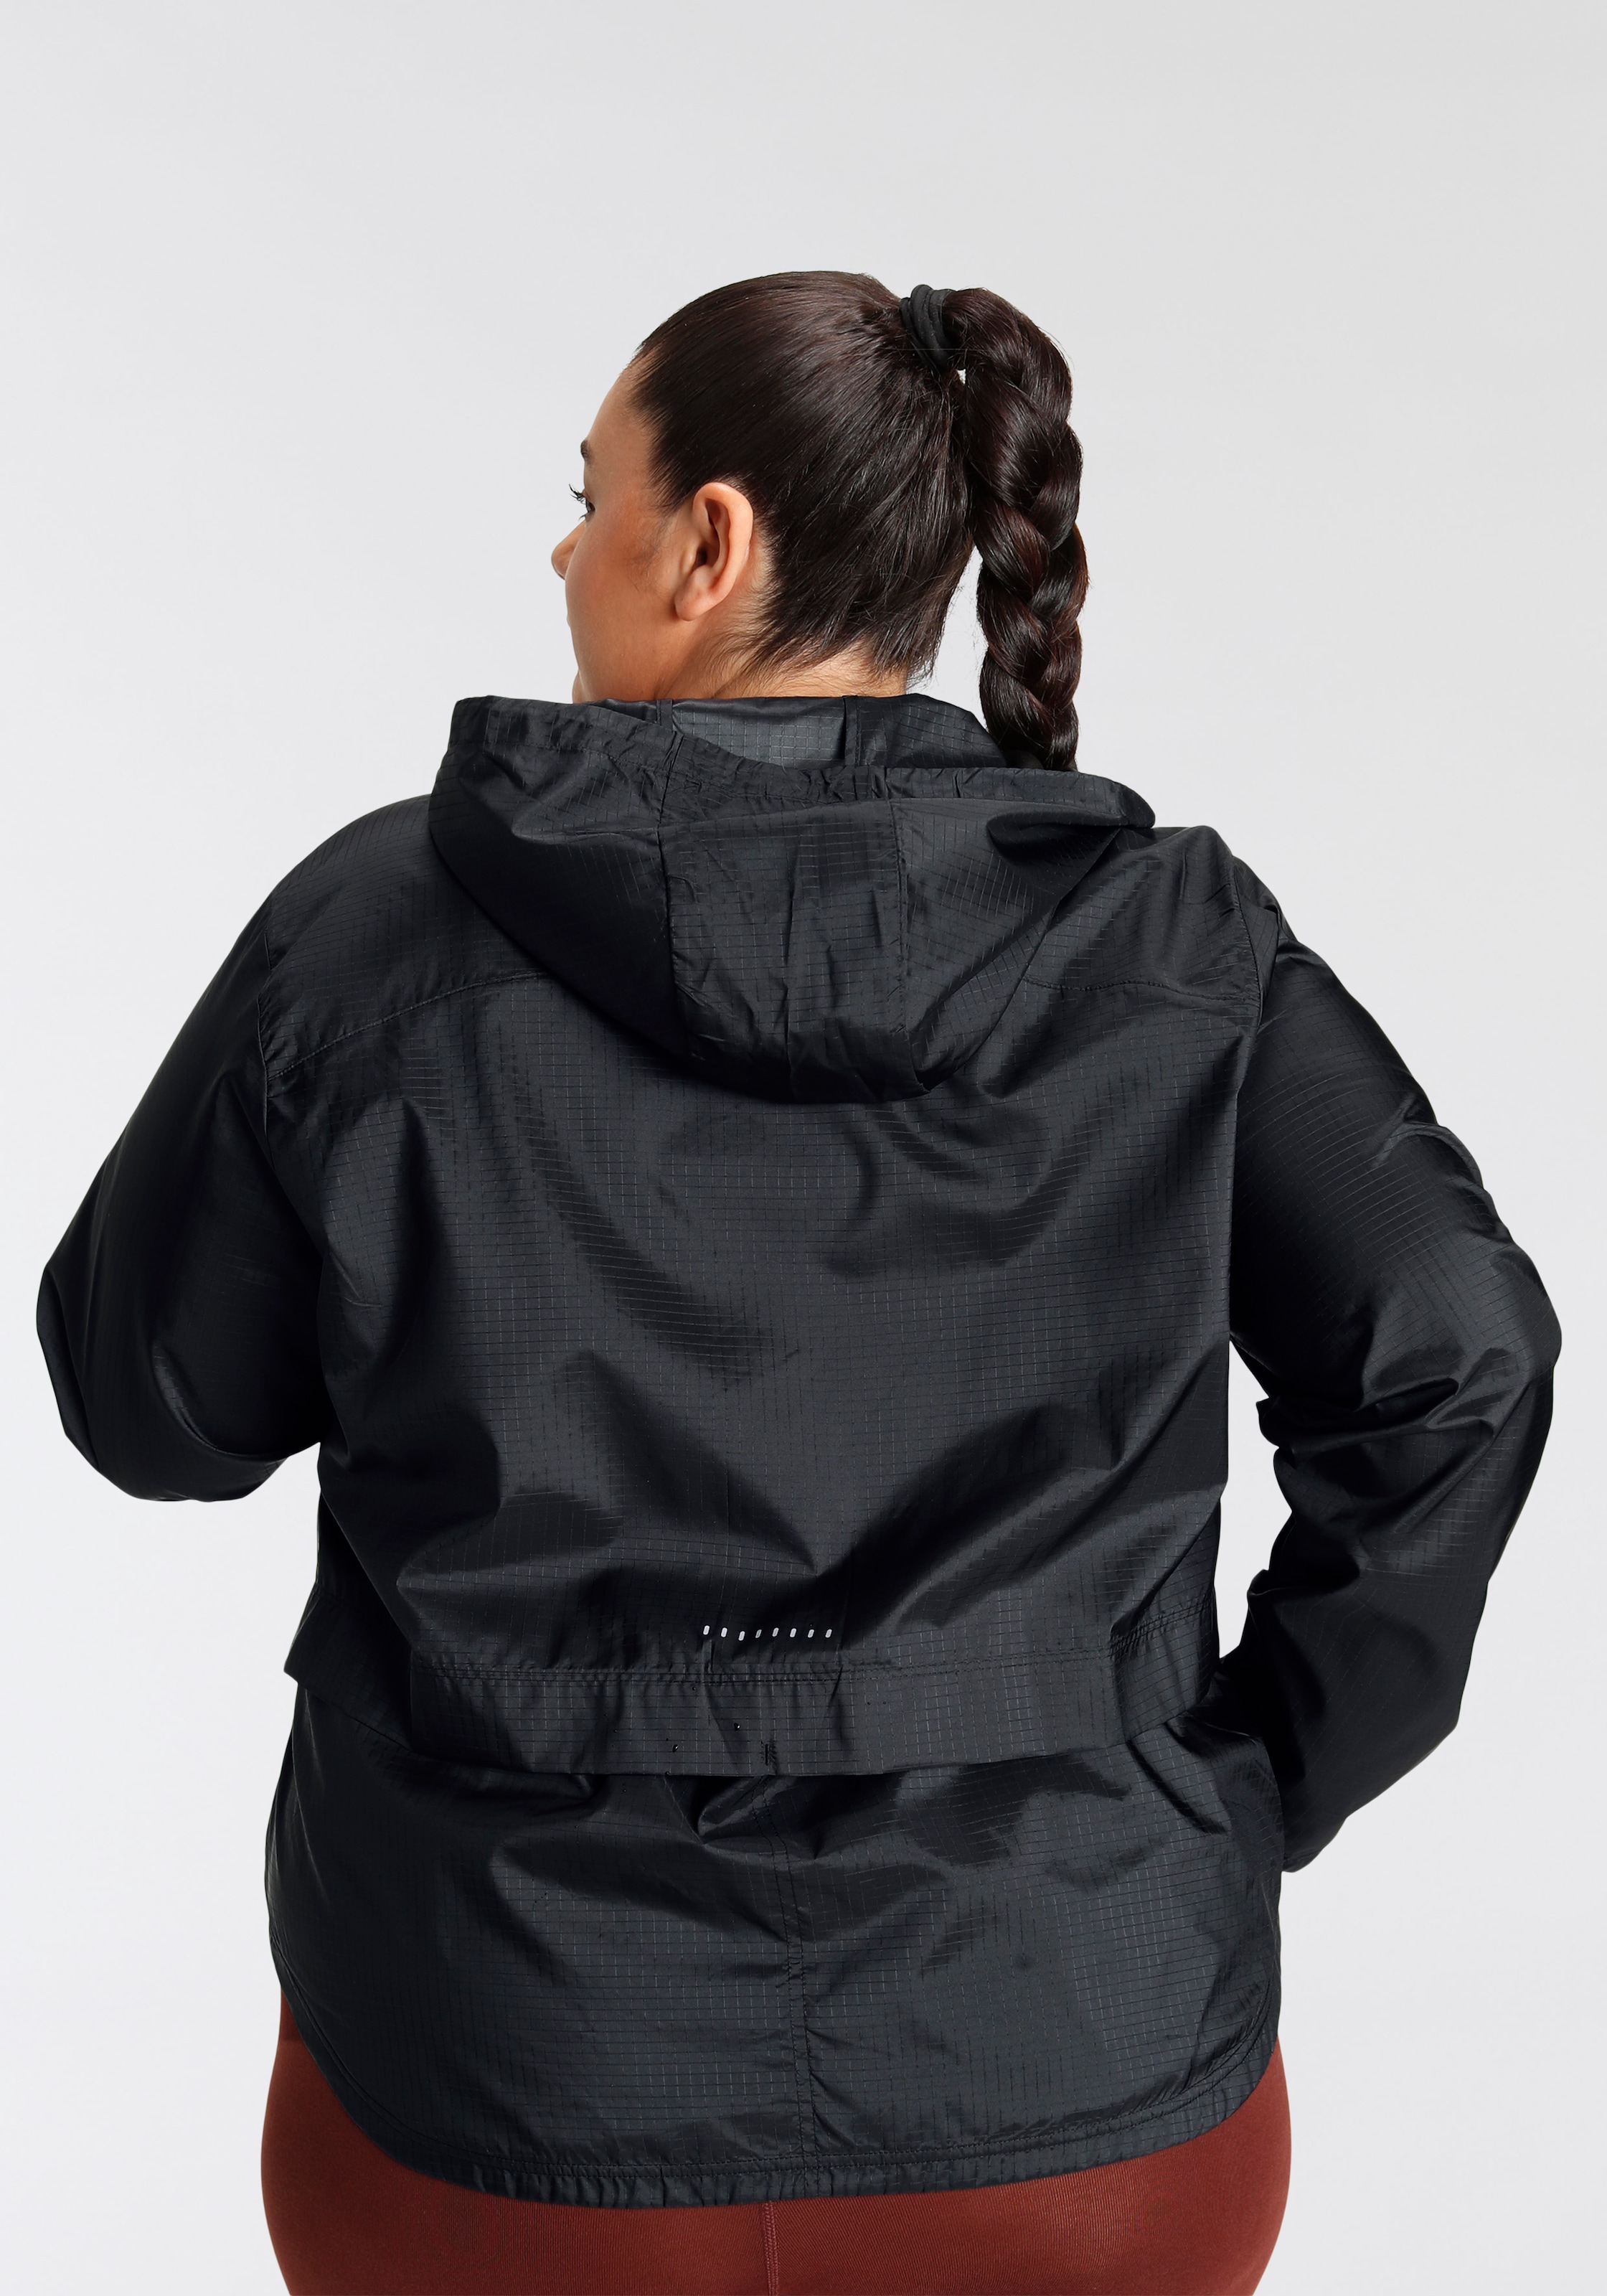 mit Laufjacke Kapuze Women\'s Jacket bestellen (Plus Running »Essential Nike versandkostenfrei ♕ Size)«,